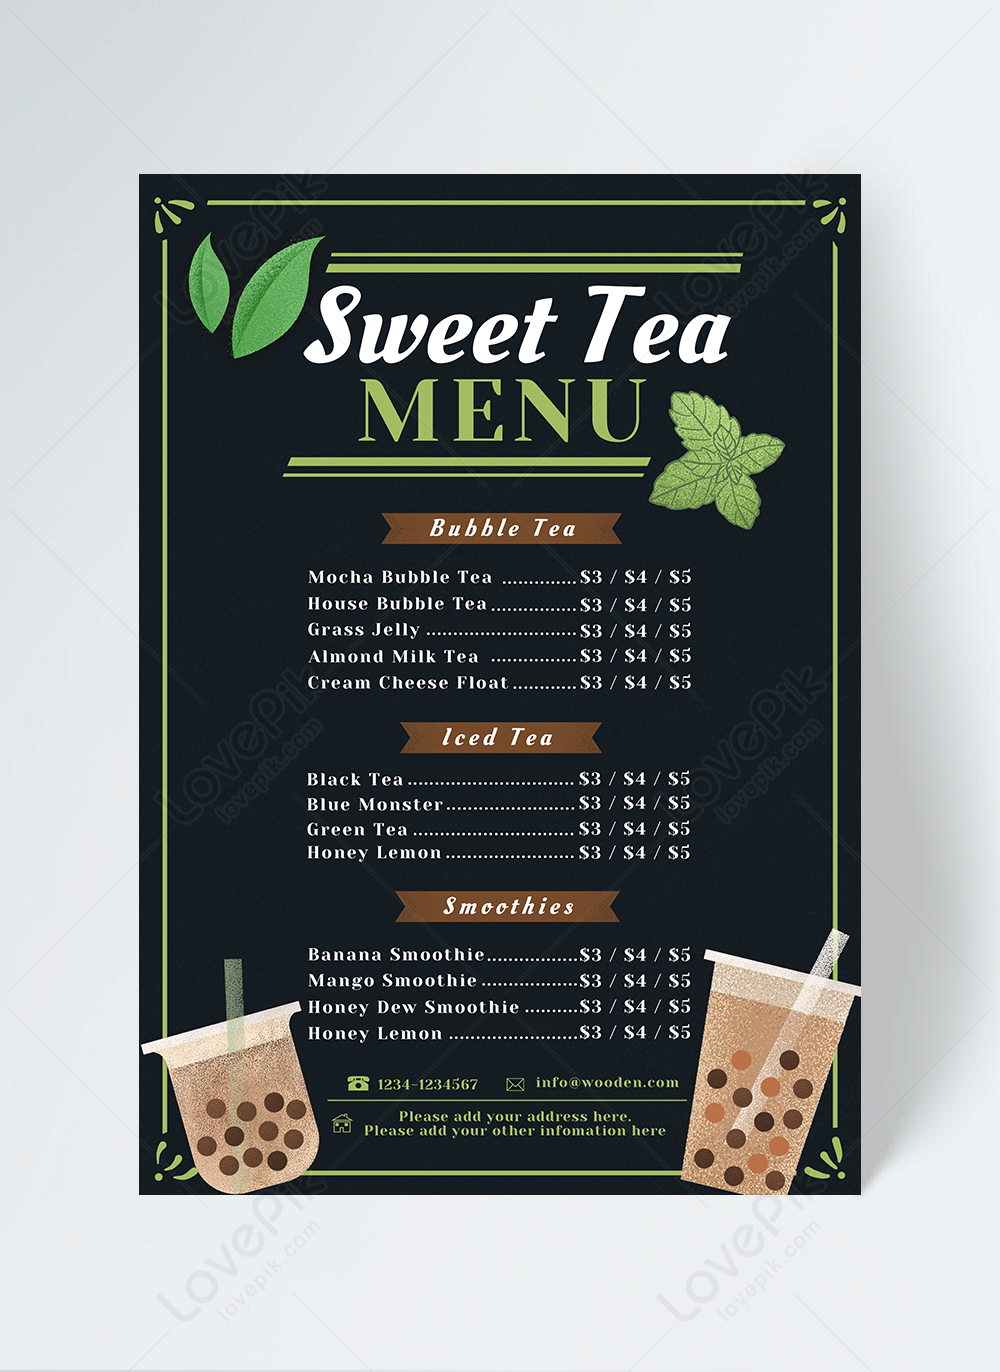 Milk Tea Shop Menu Design Template Image Picture Free Download 465491583 Lovepik Com